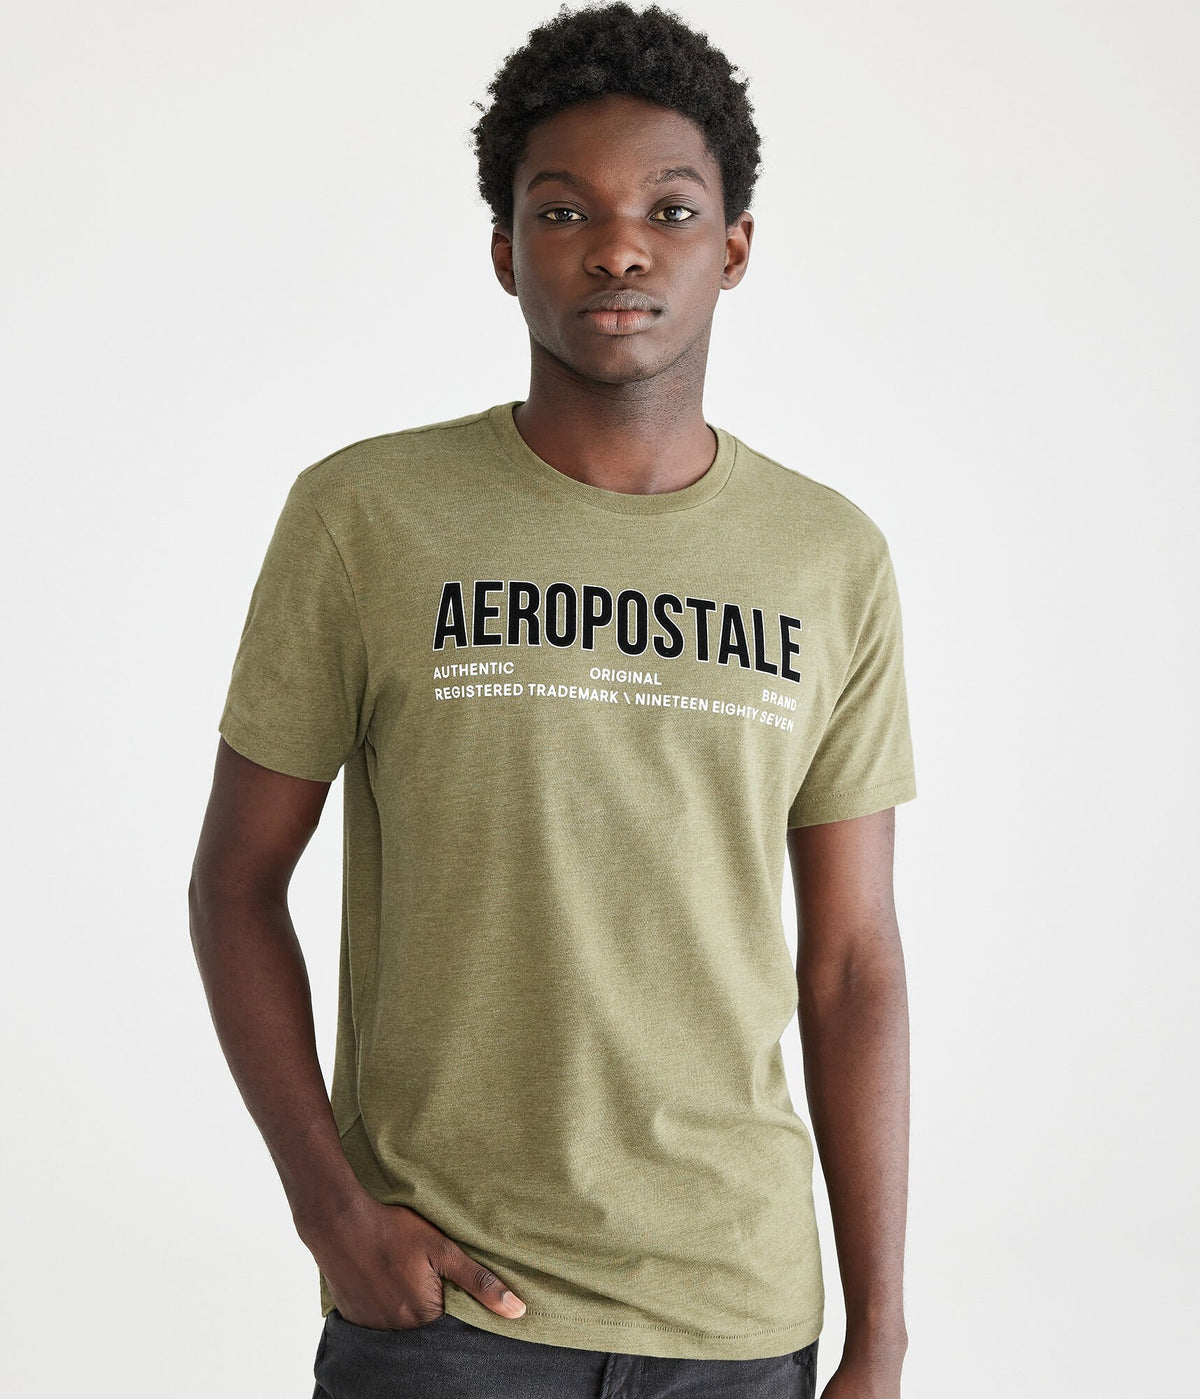 Aeropostale Mens' Aeropostale Original Brand Graphic Tee - Green - Size L - Cotton - Teen Fashion & Clothing Kelp Green